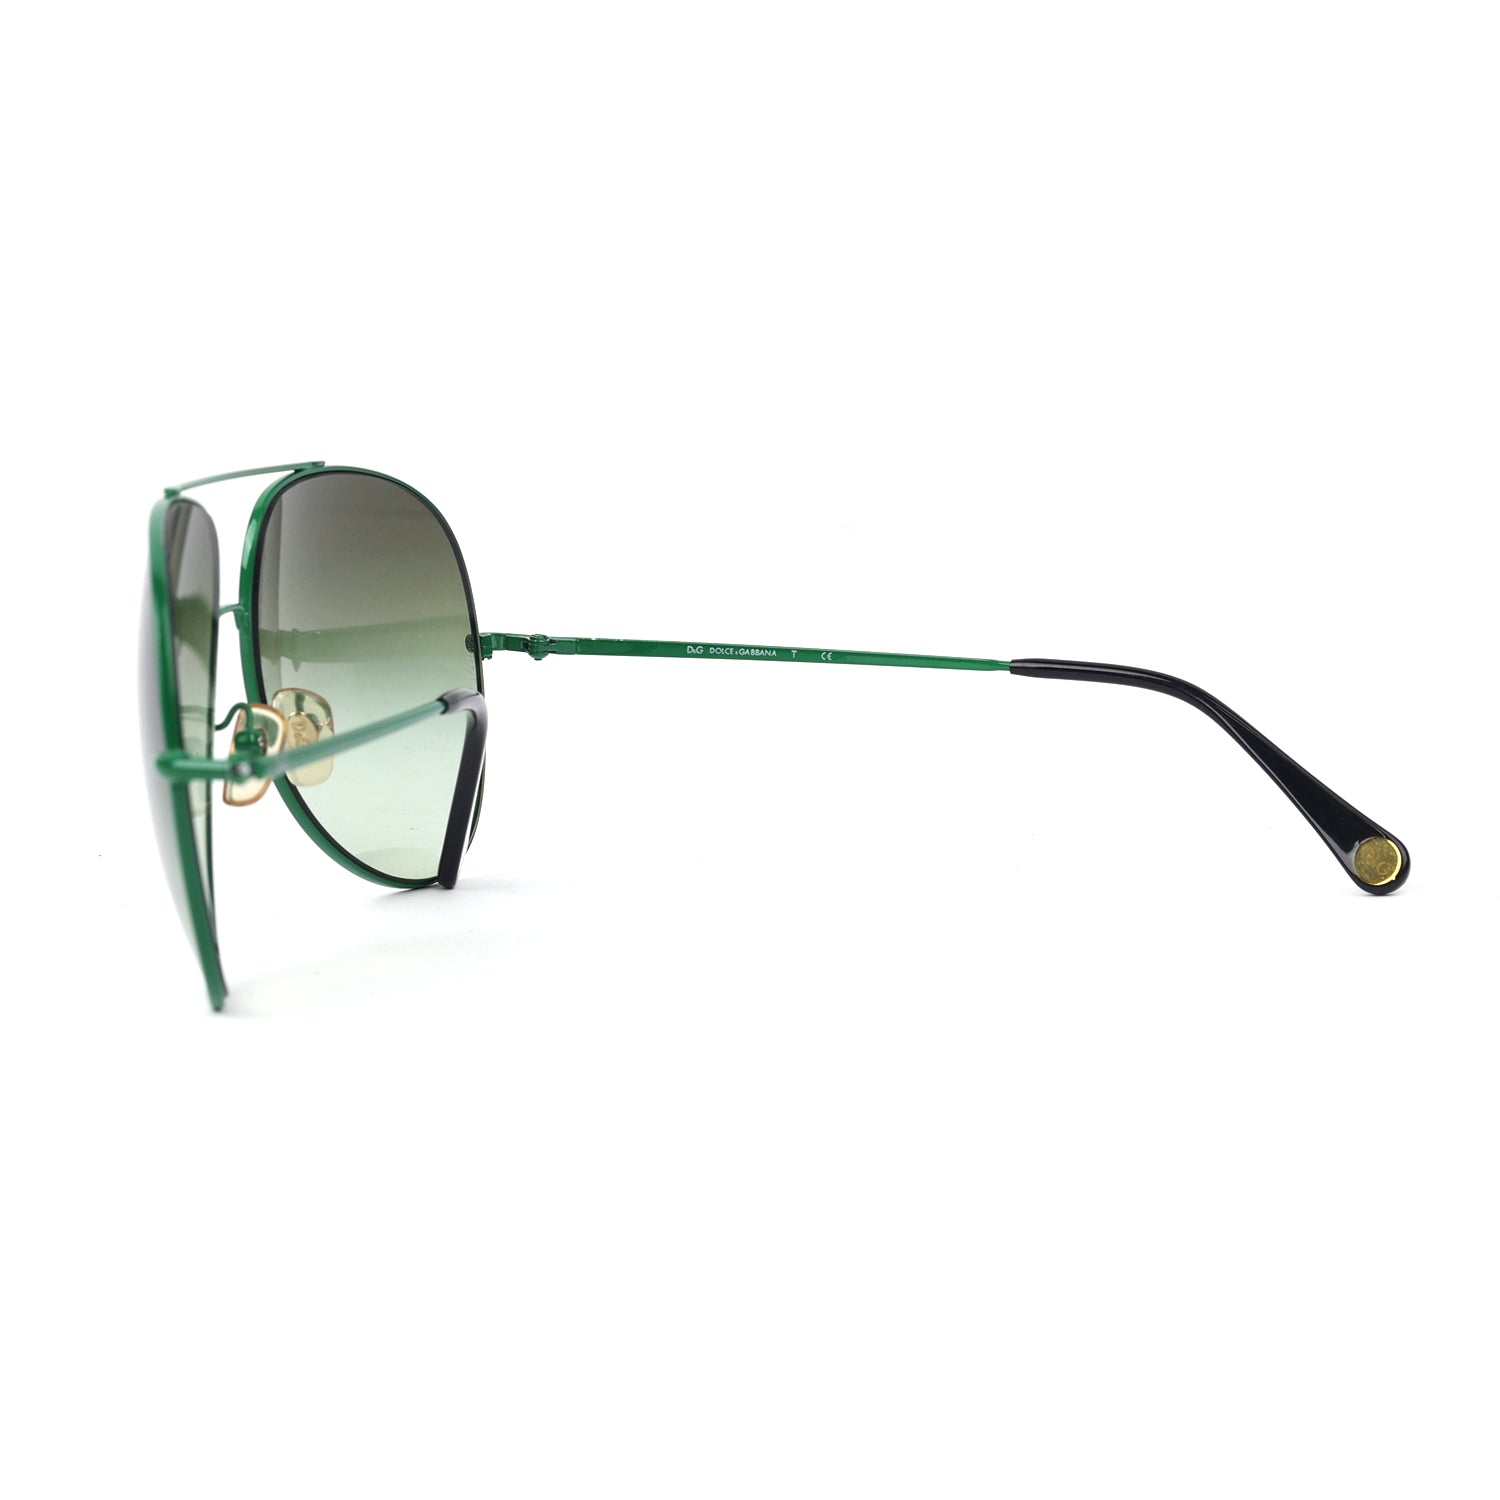 Green Aviator Sunglasses